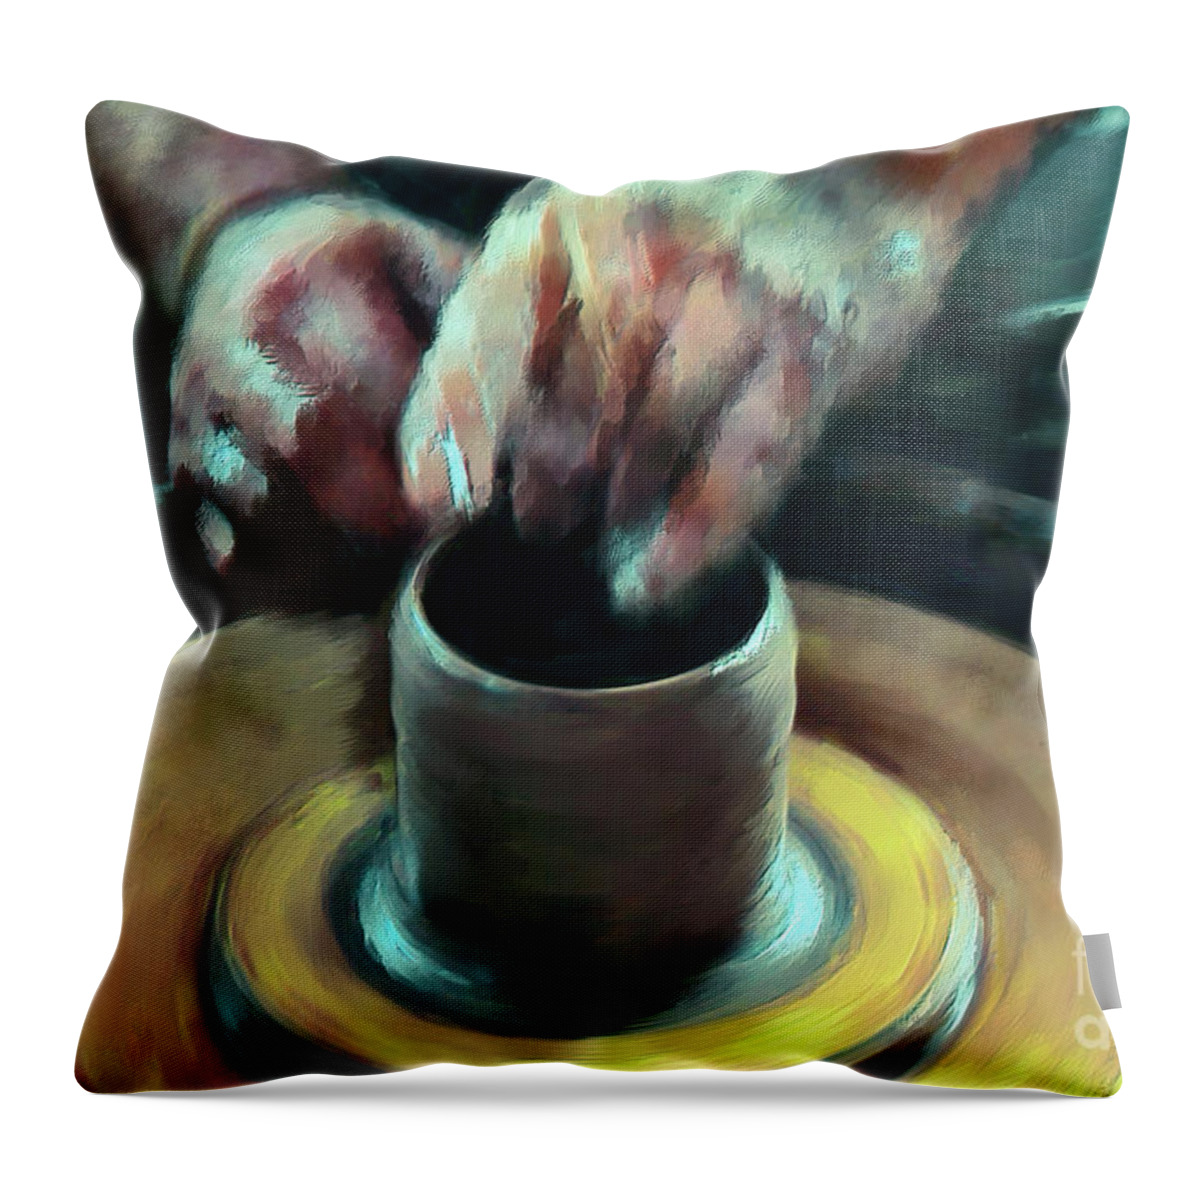 Pot Throw Pillow featuring the digital art Throwing A Pot by Lois Bryan